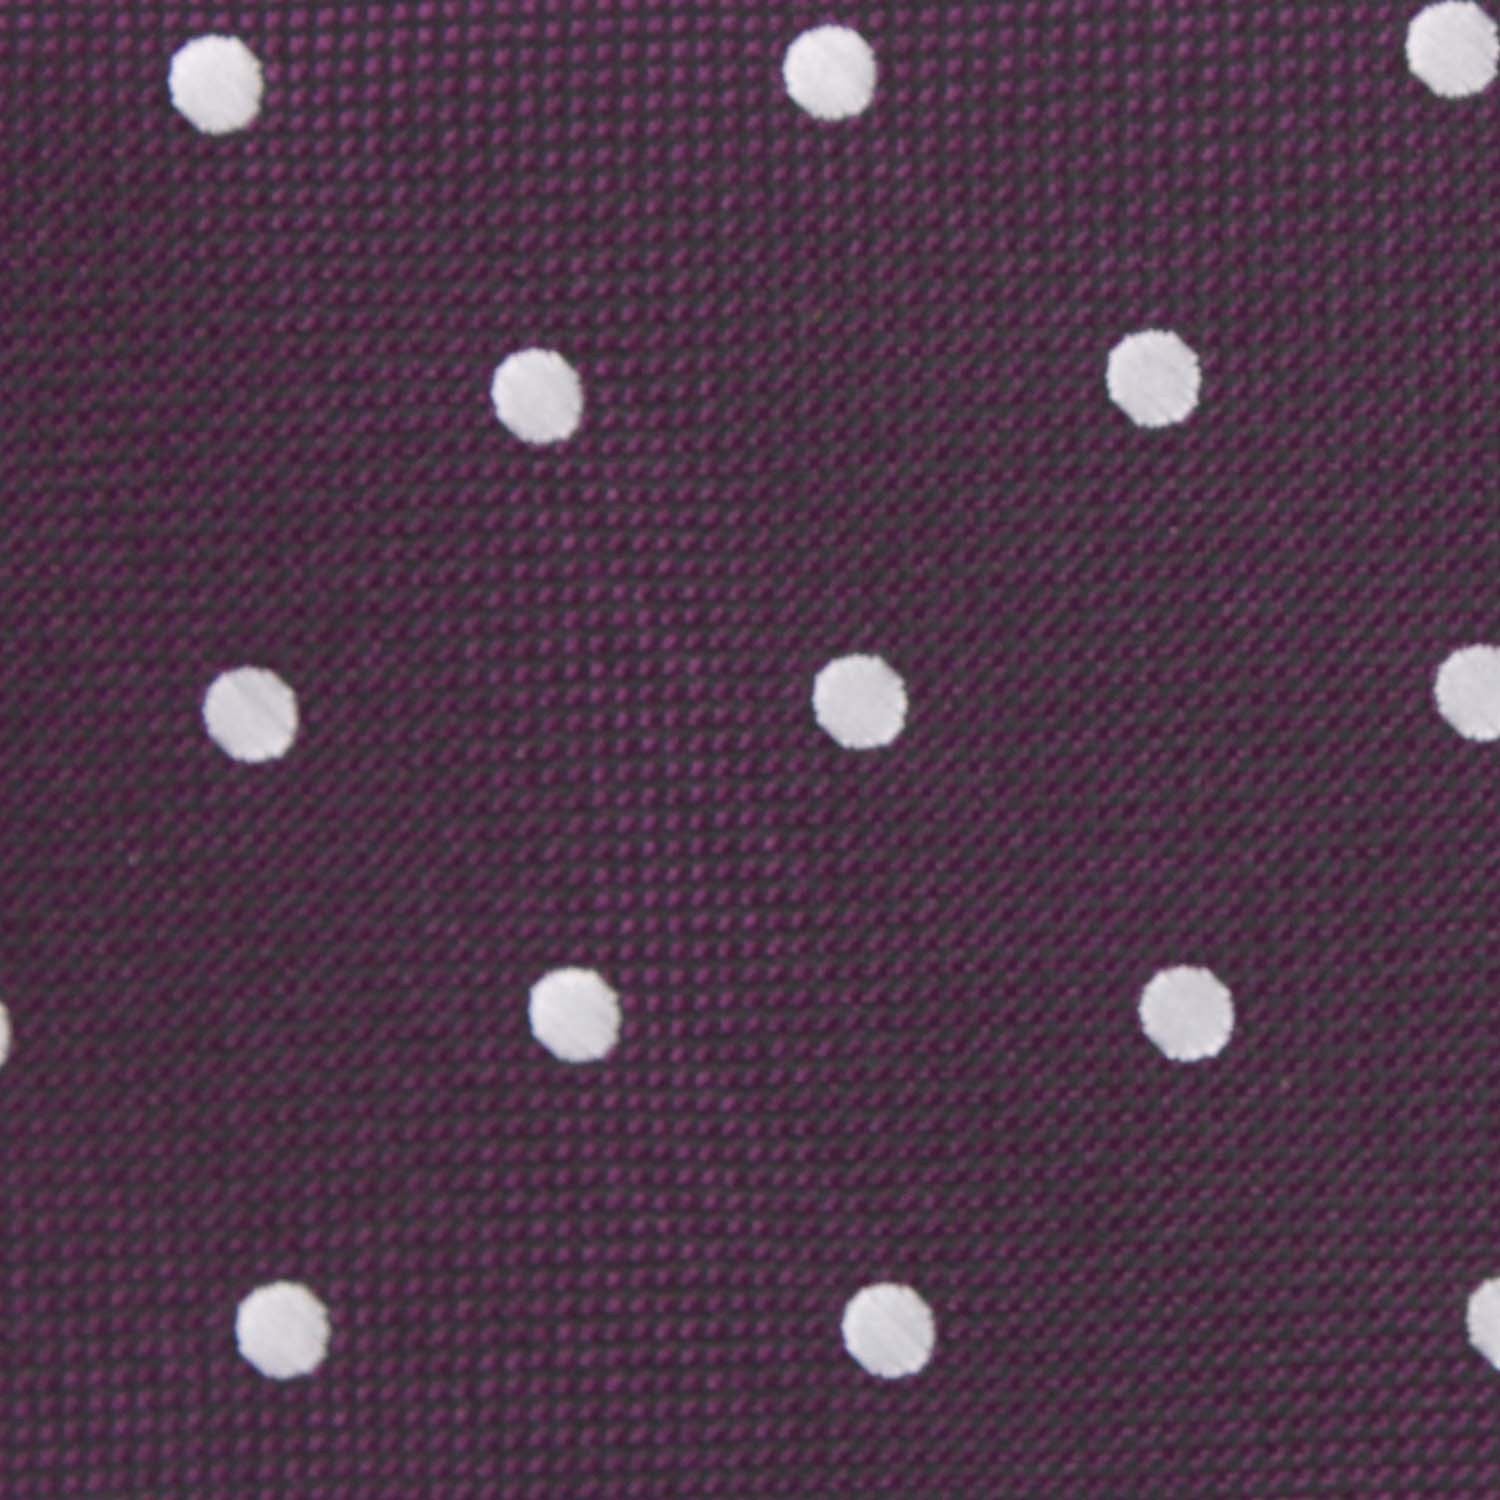 Eggplant Plum Purple with White Polka Dots Fabric Self Tie Diamond Tip Bow TieM124